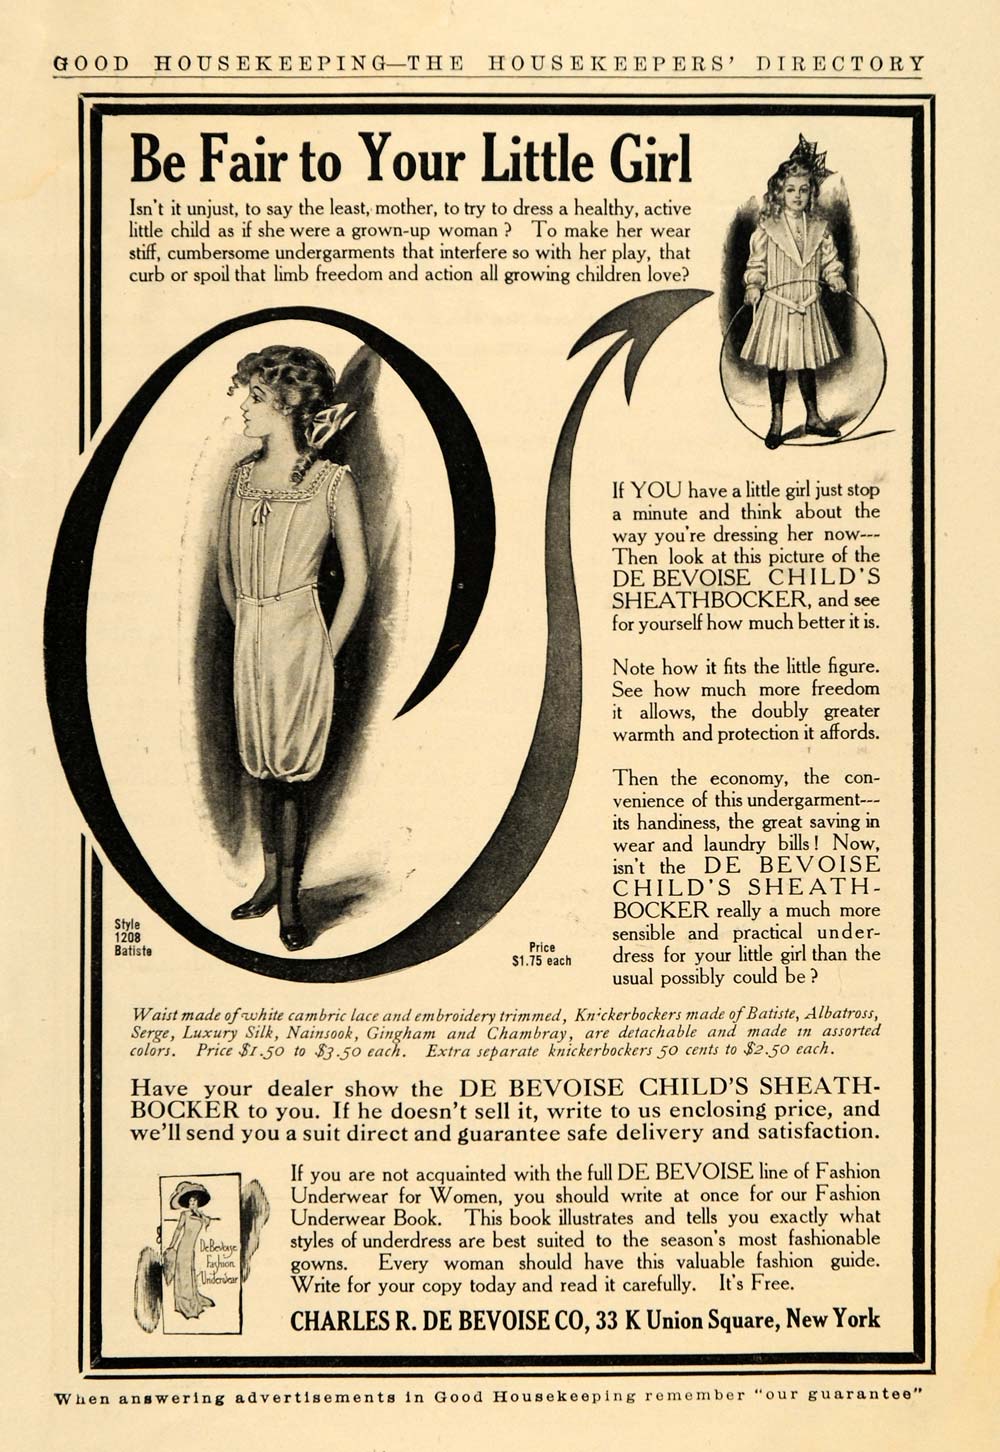 1913 Ad Charles R. De Bevoise Clothes Child Underwear - ORIGINAL ADVERTISING GH3